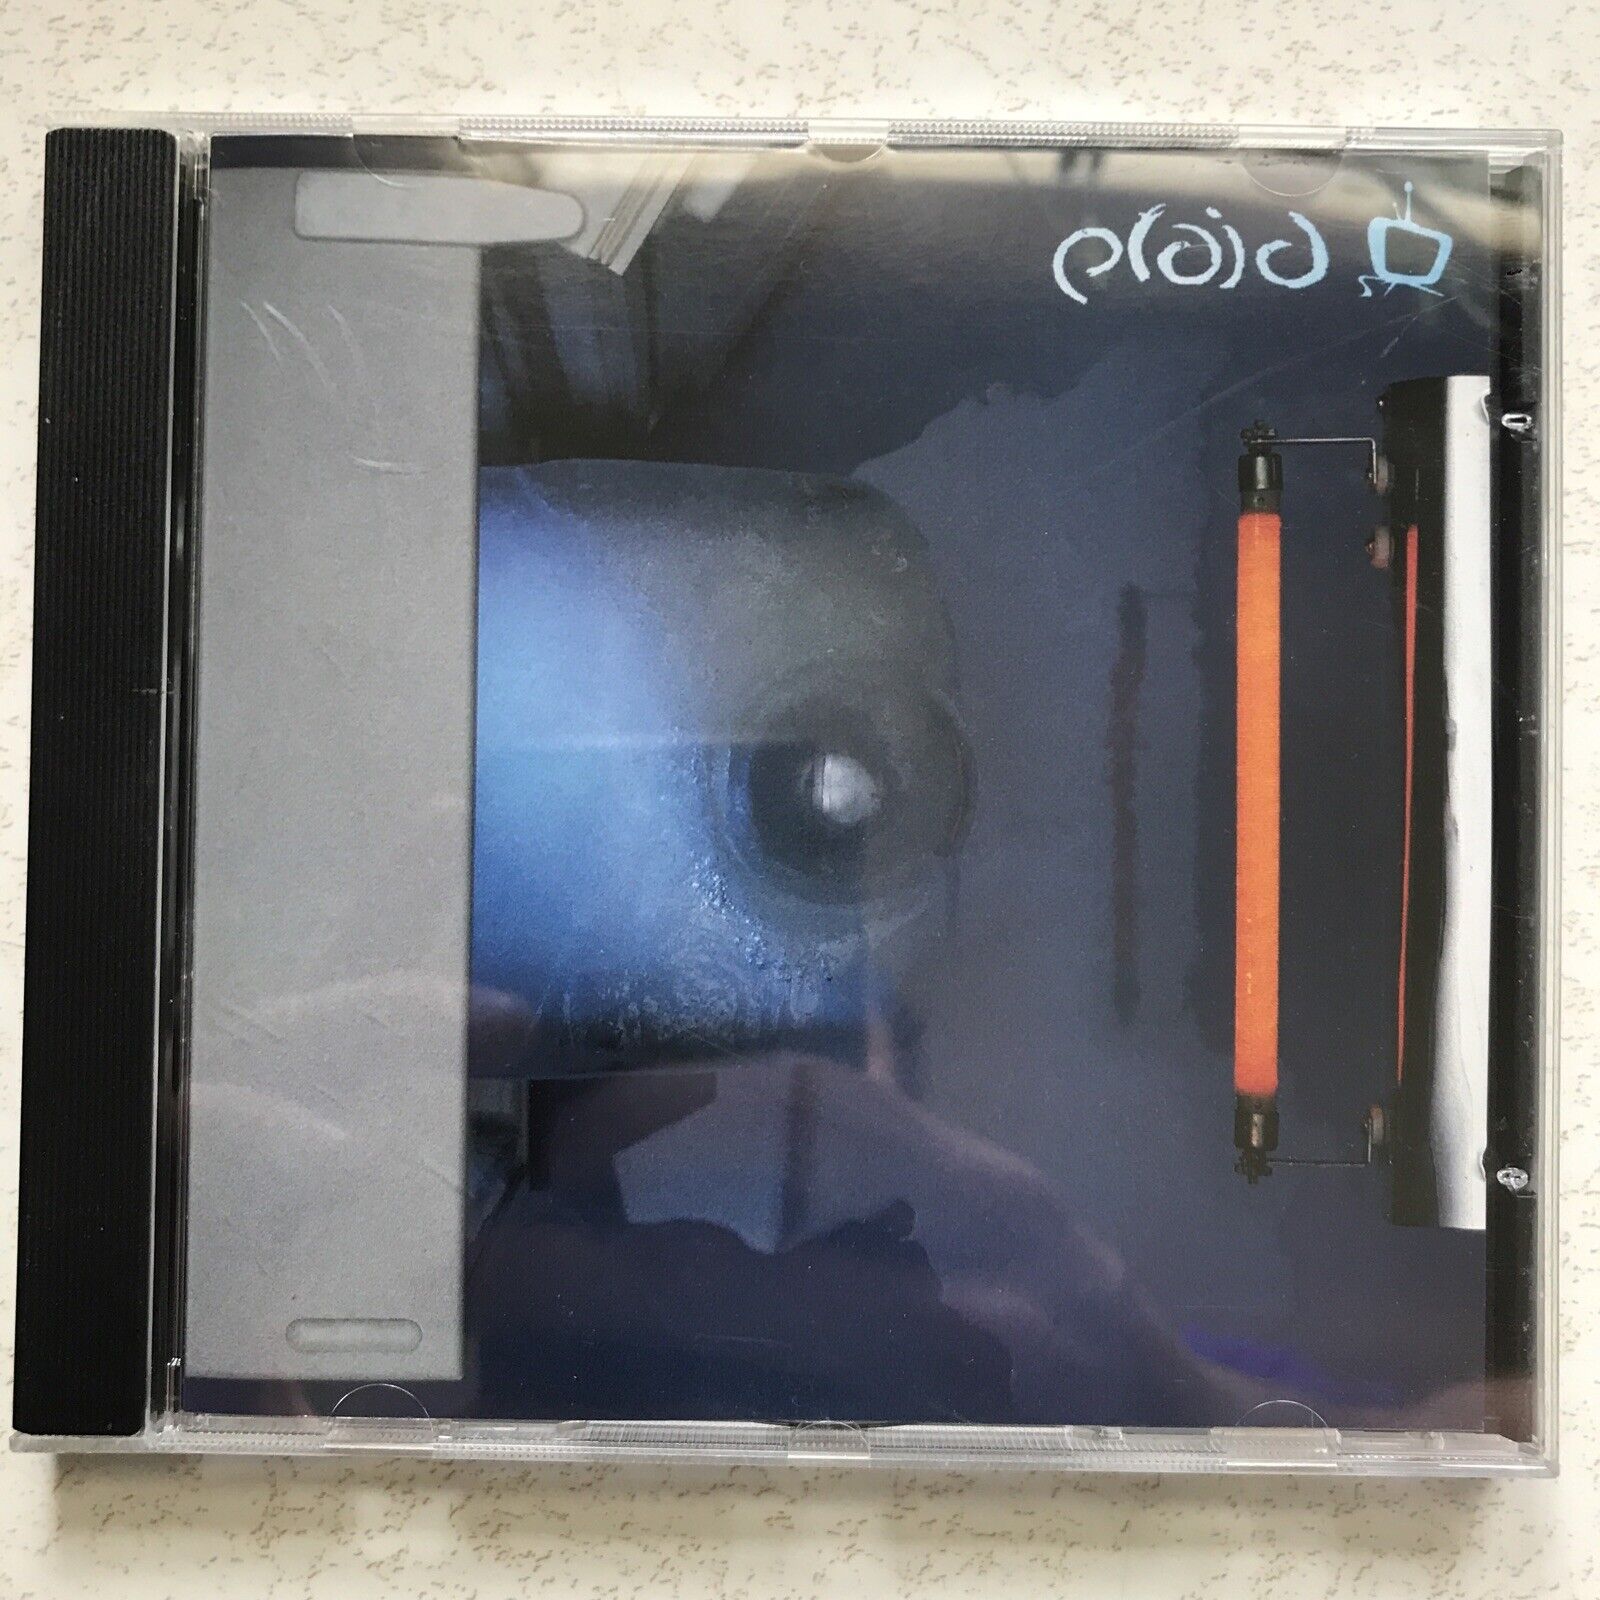 Plaid – Undoneson CD SINGLE | UK Import Rare OOP Warp Records IDM 1997